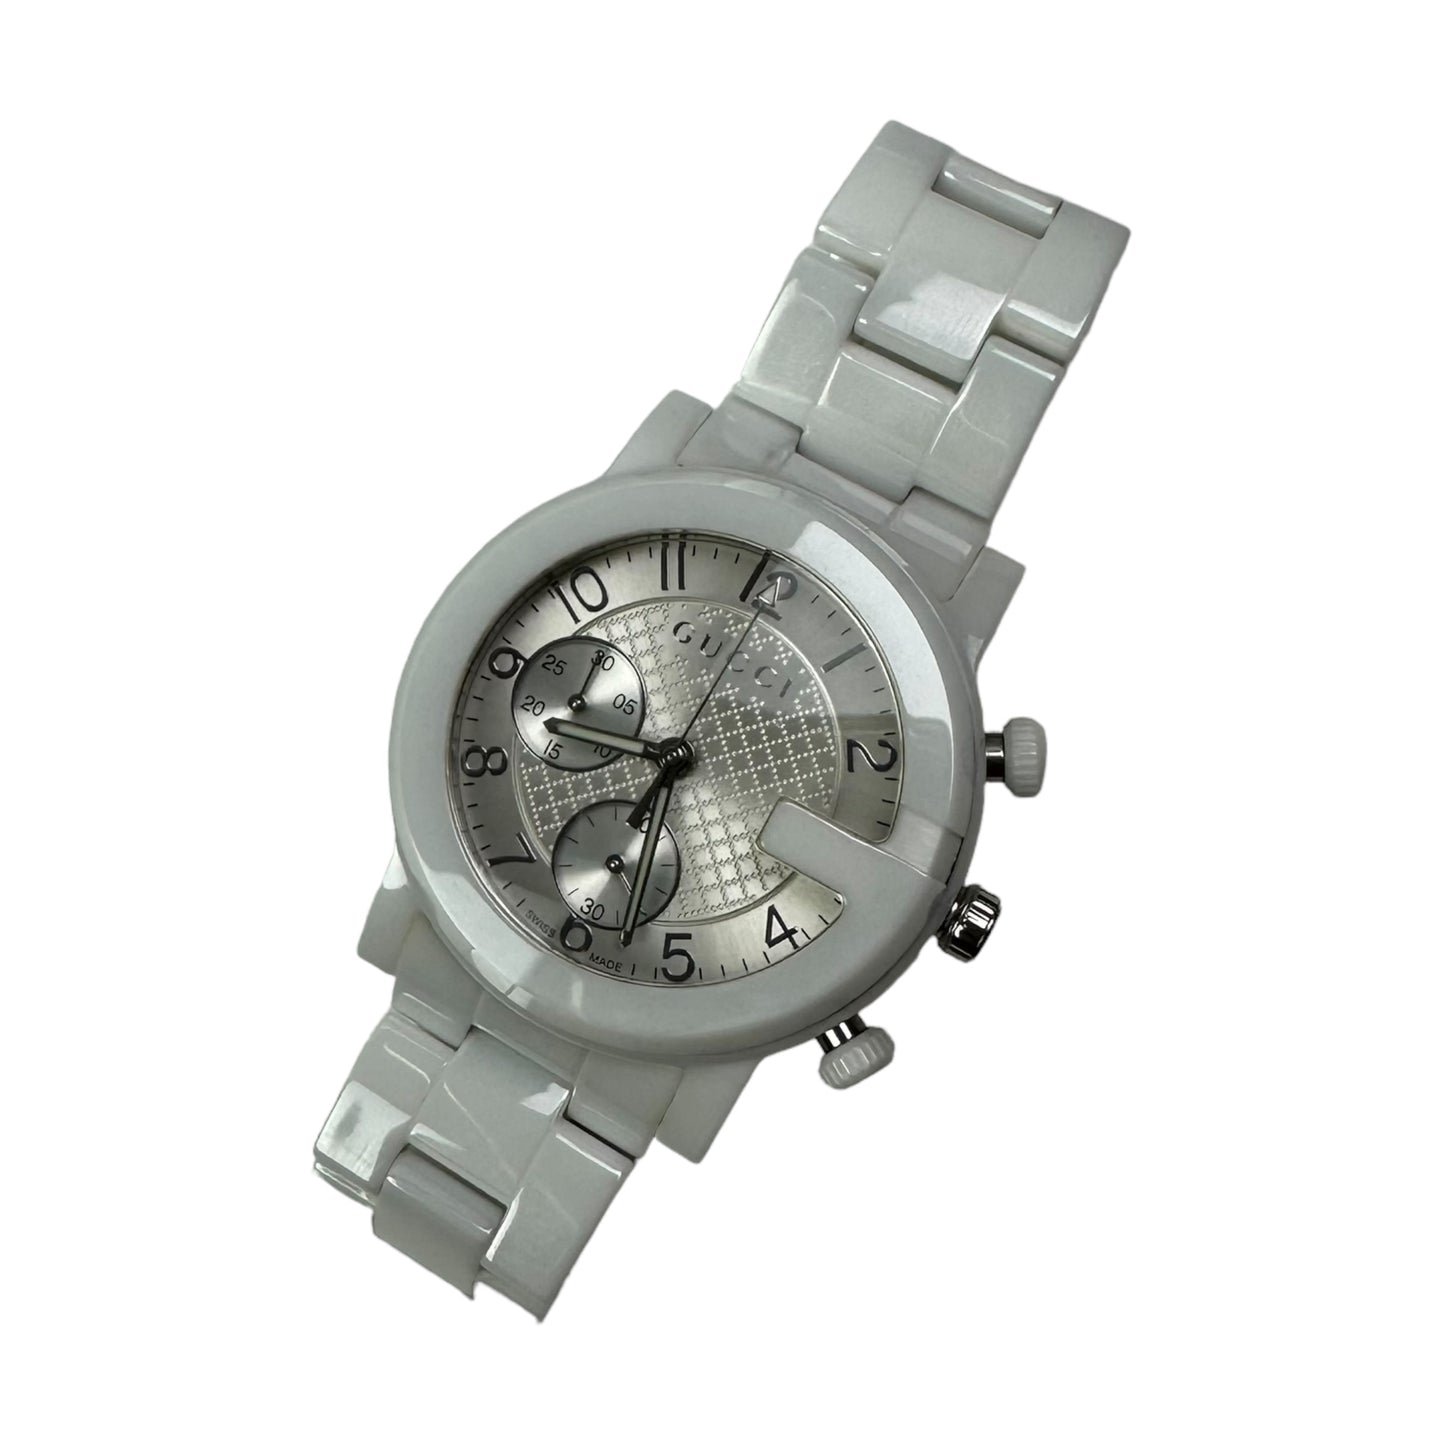 Gucci Ceramic G-Chrono Quartz Watch